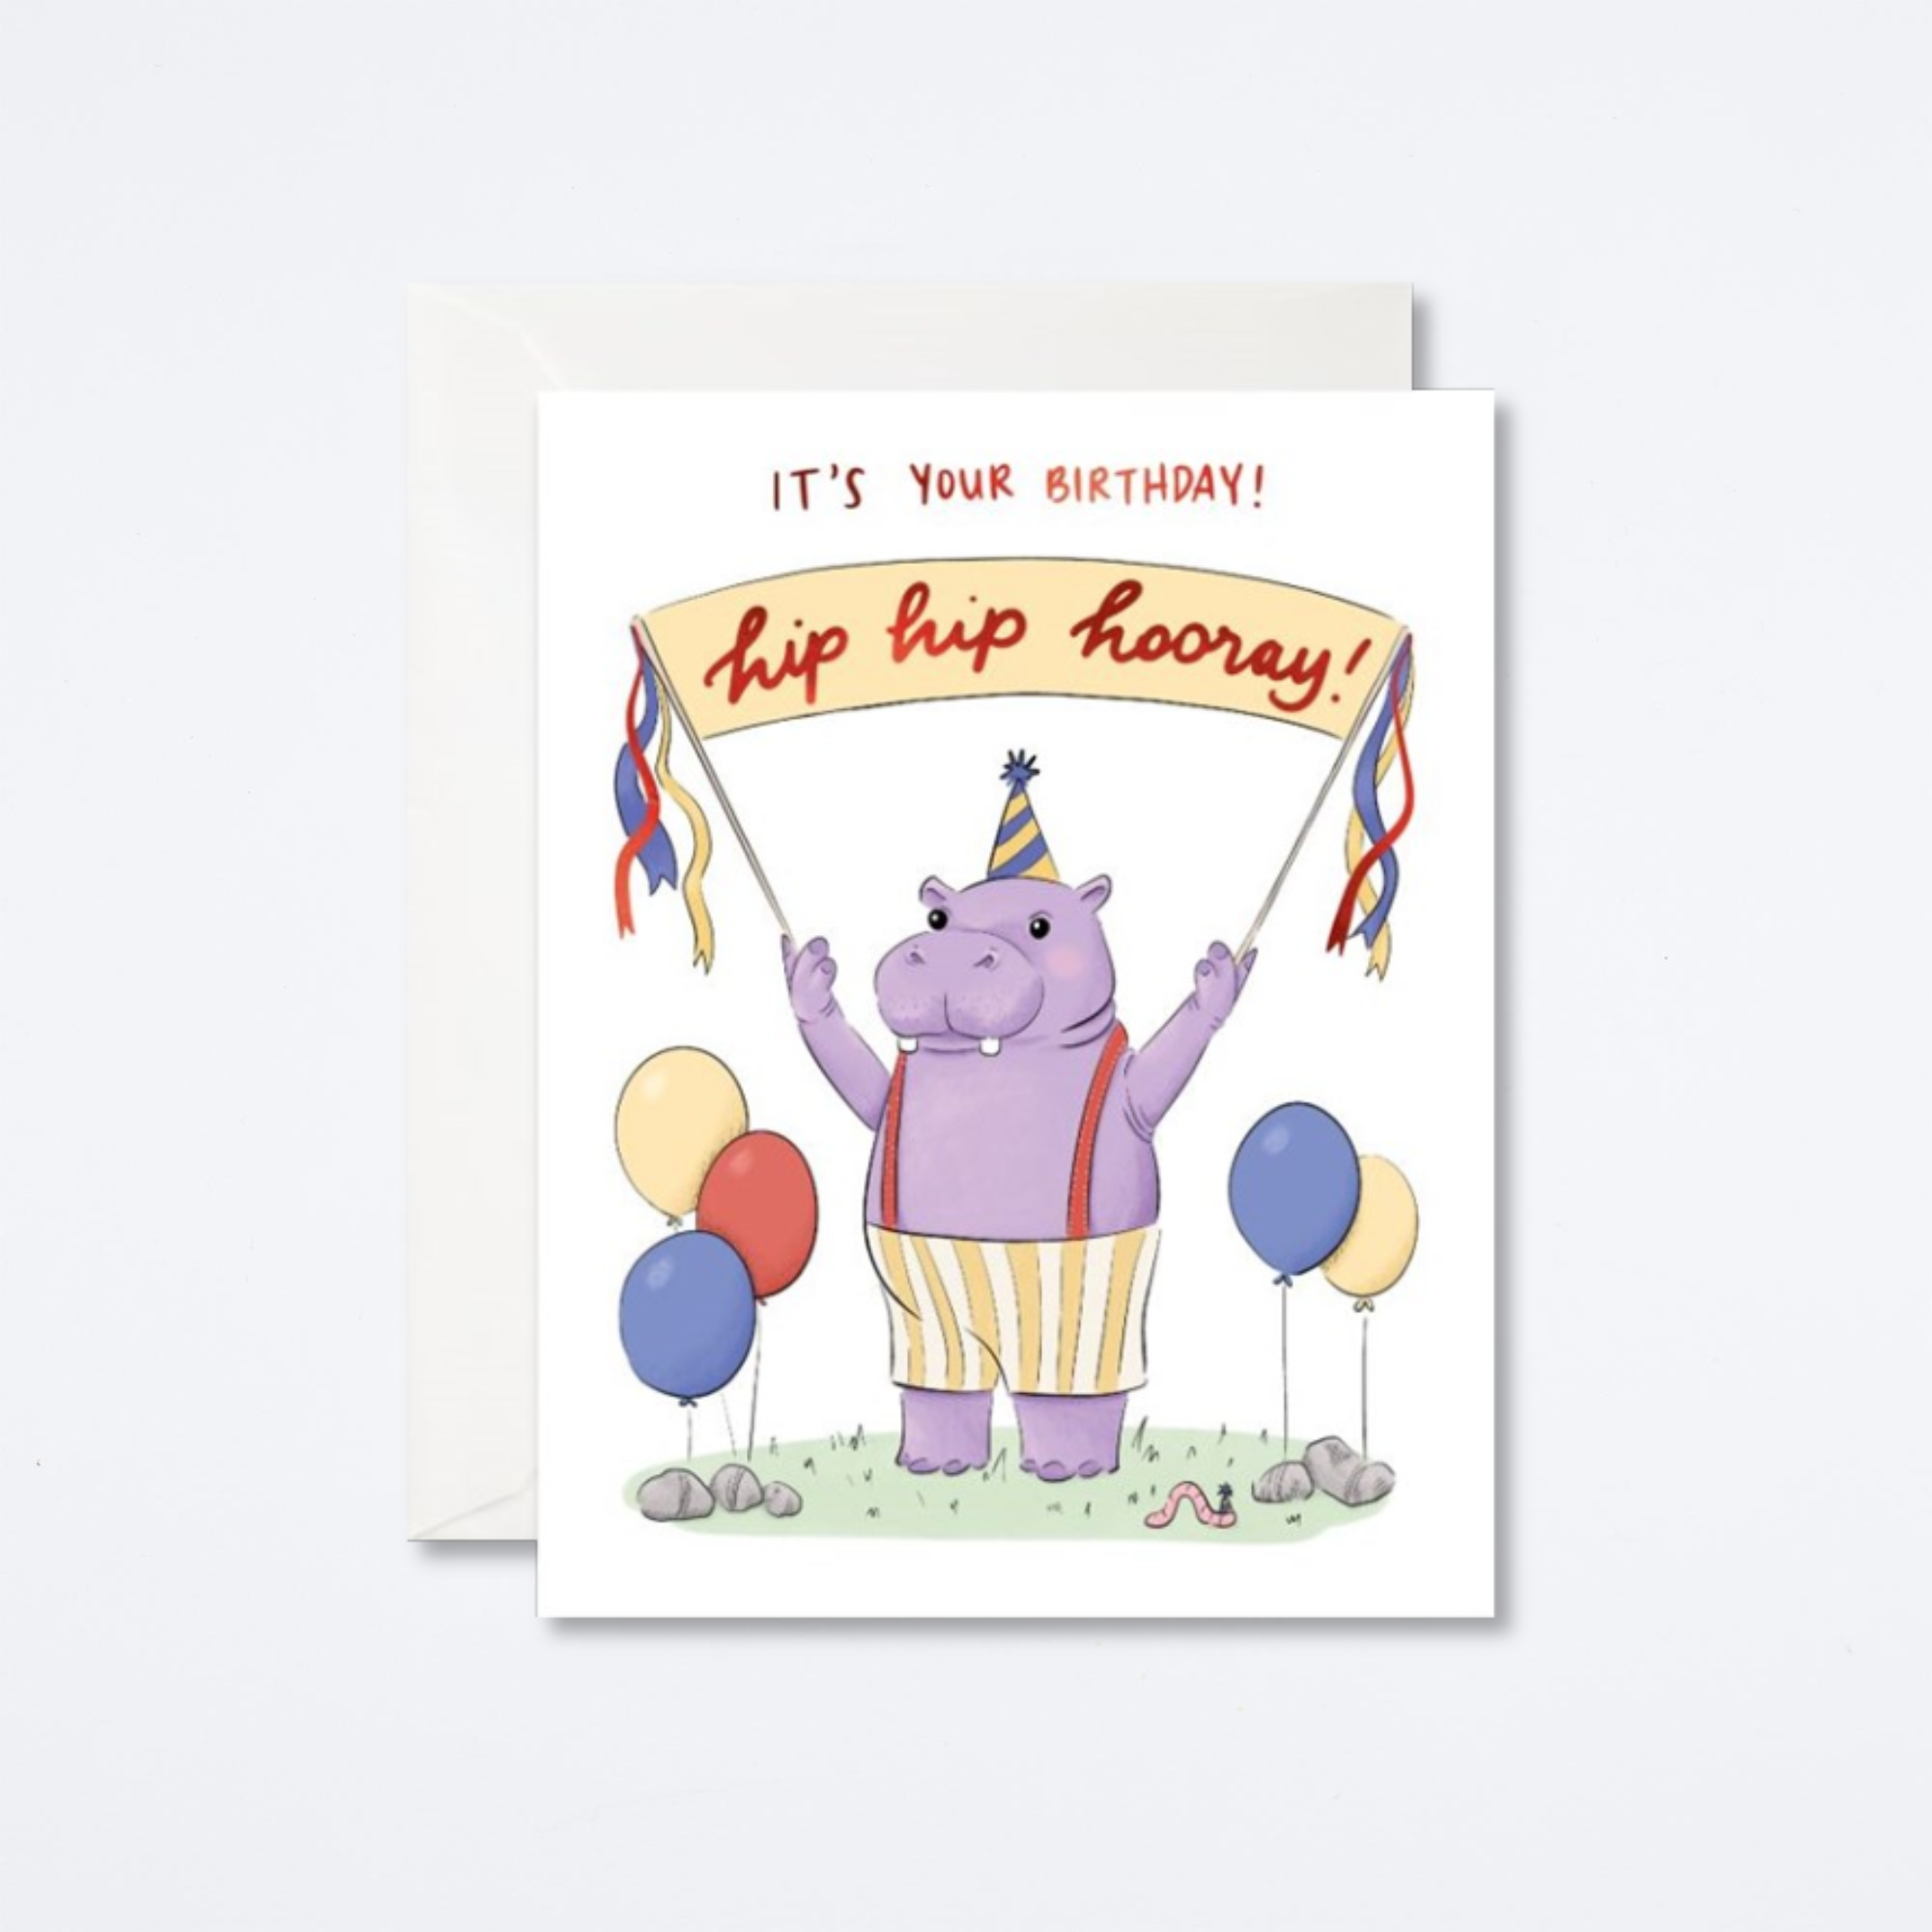 Hip Hip Hooray Birthday Card